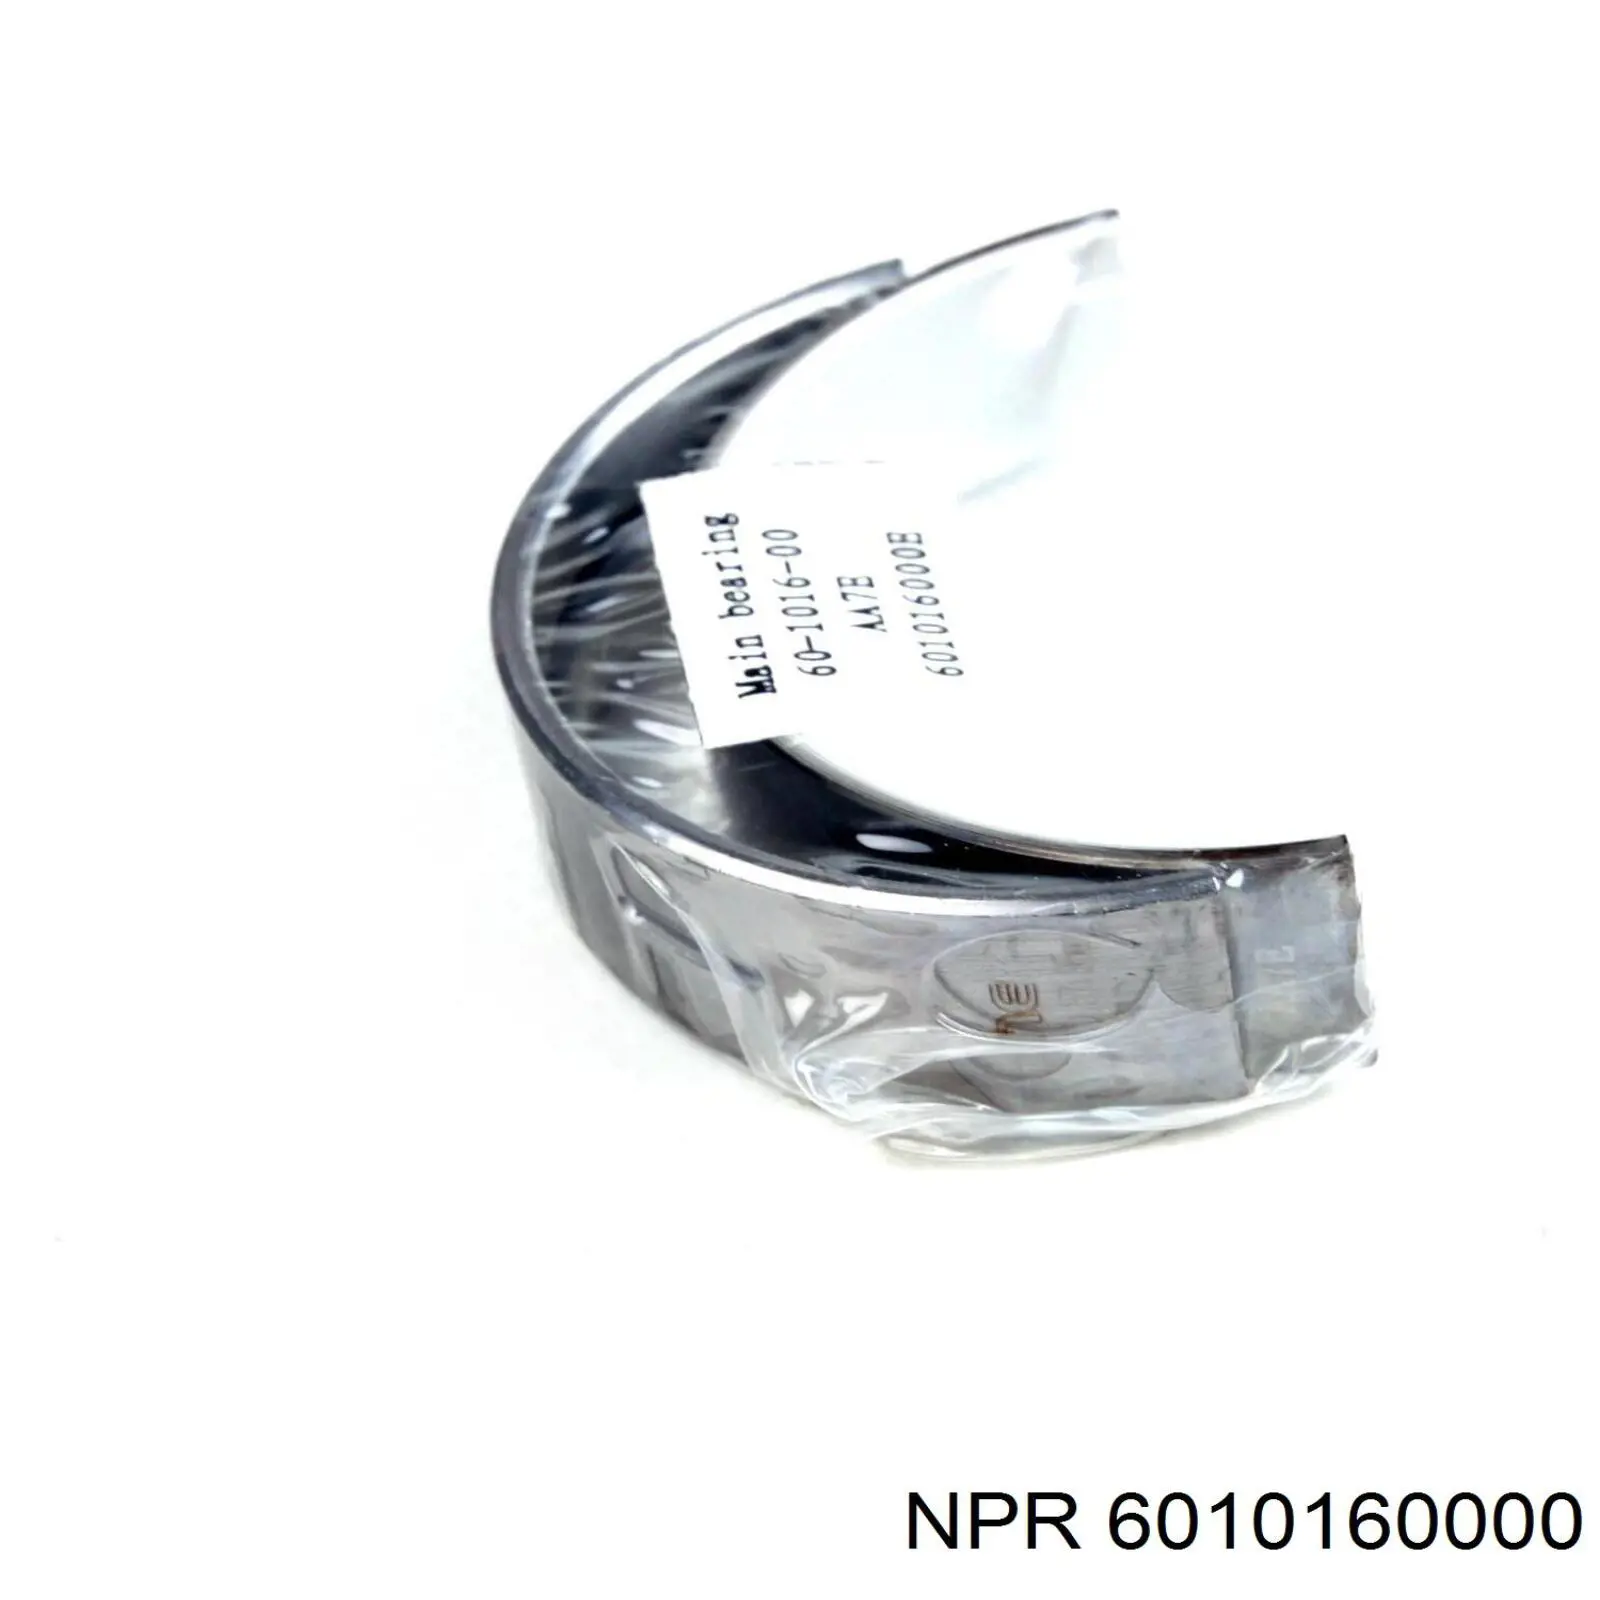 6010160000 NE/NPR вкладыши коленвала коренные, комплект, стандарт (std)